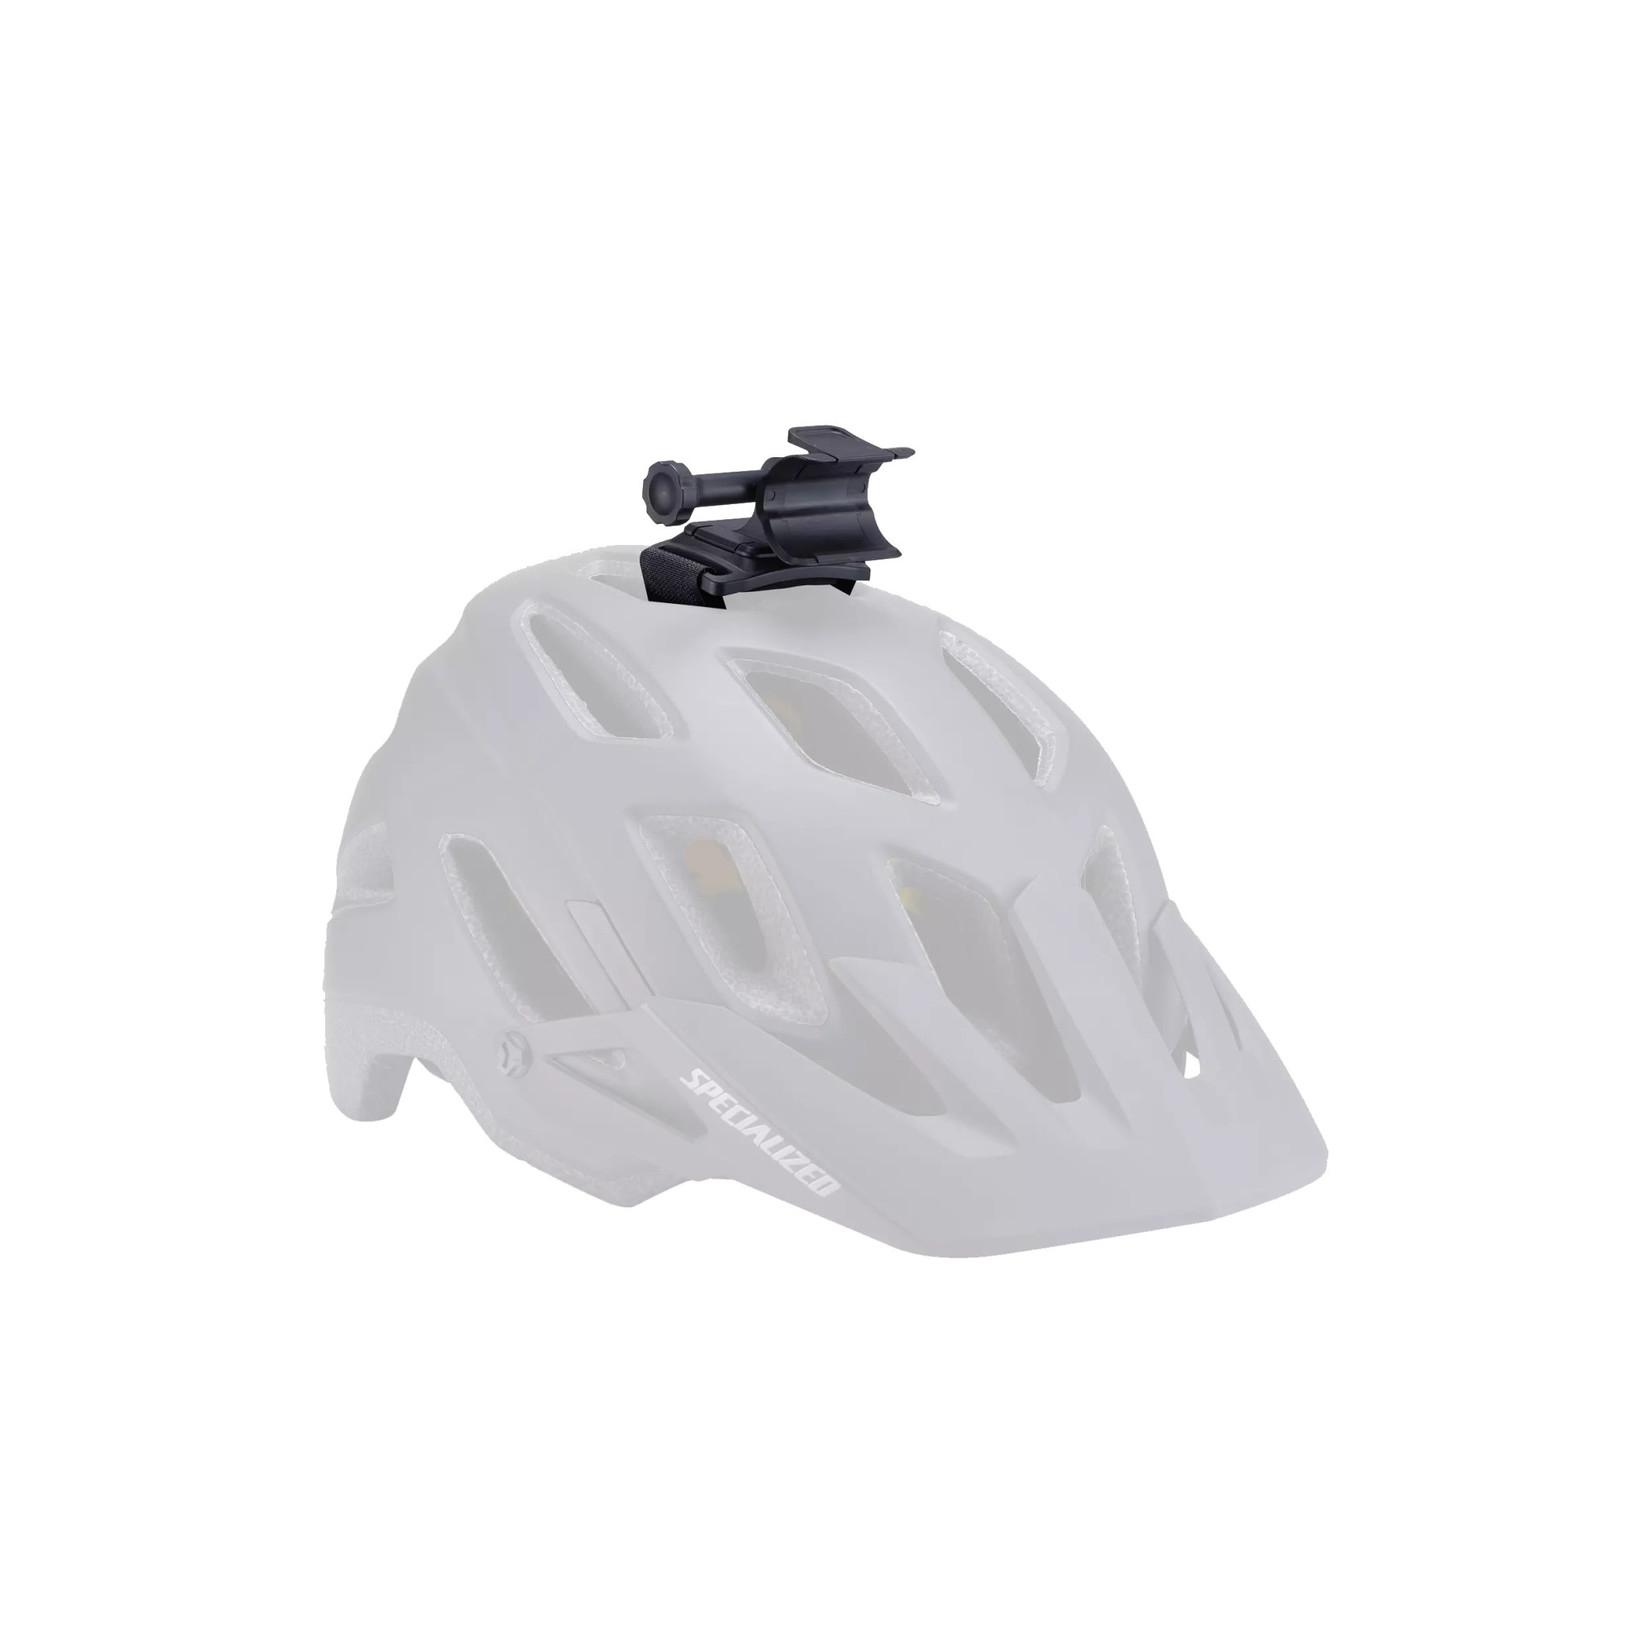 Specialized Flux™ 900/1200 Headlight Helmet Mount